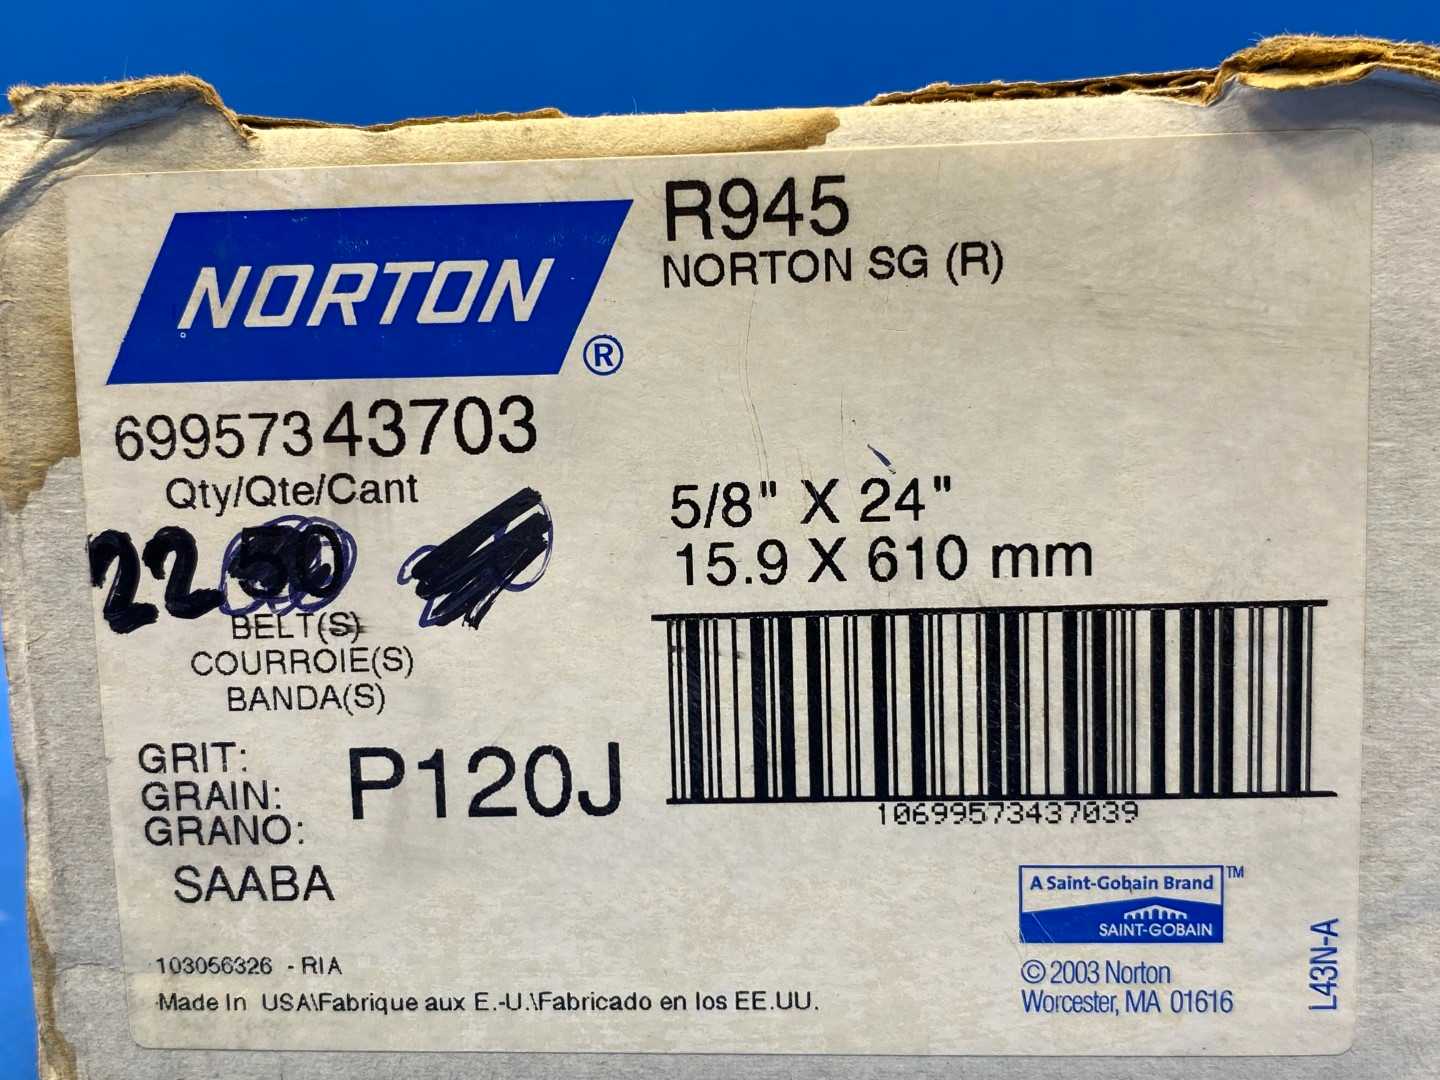 Norton R945 Grit P120J 5/8" x 24" Belt (box of 22)